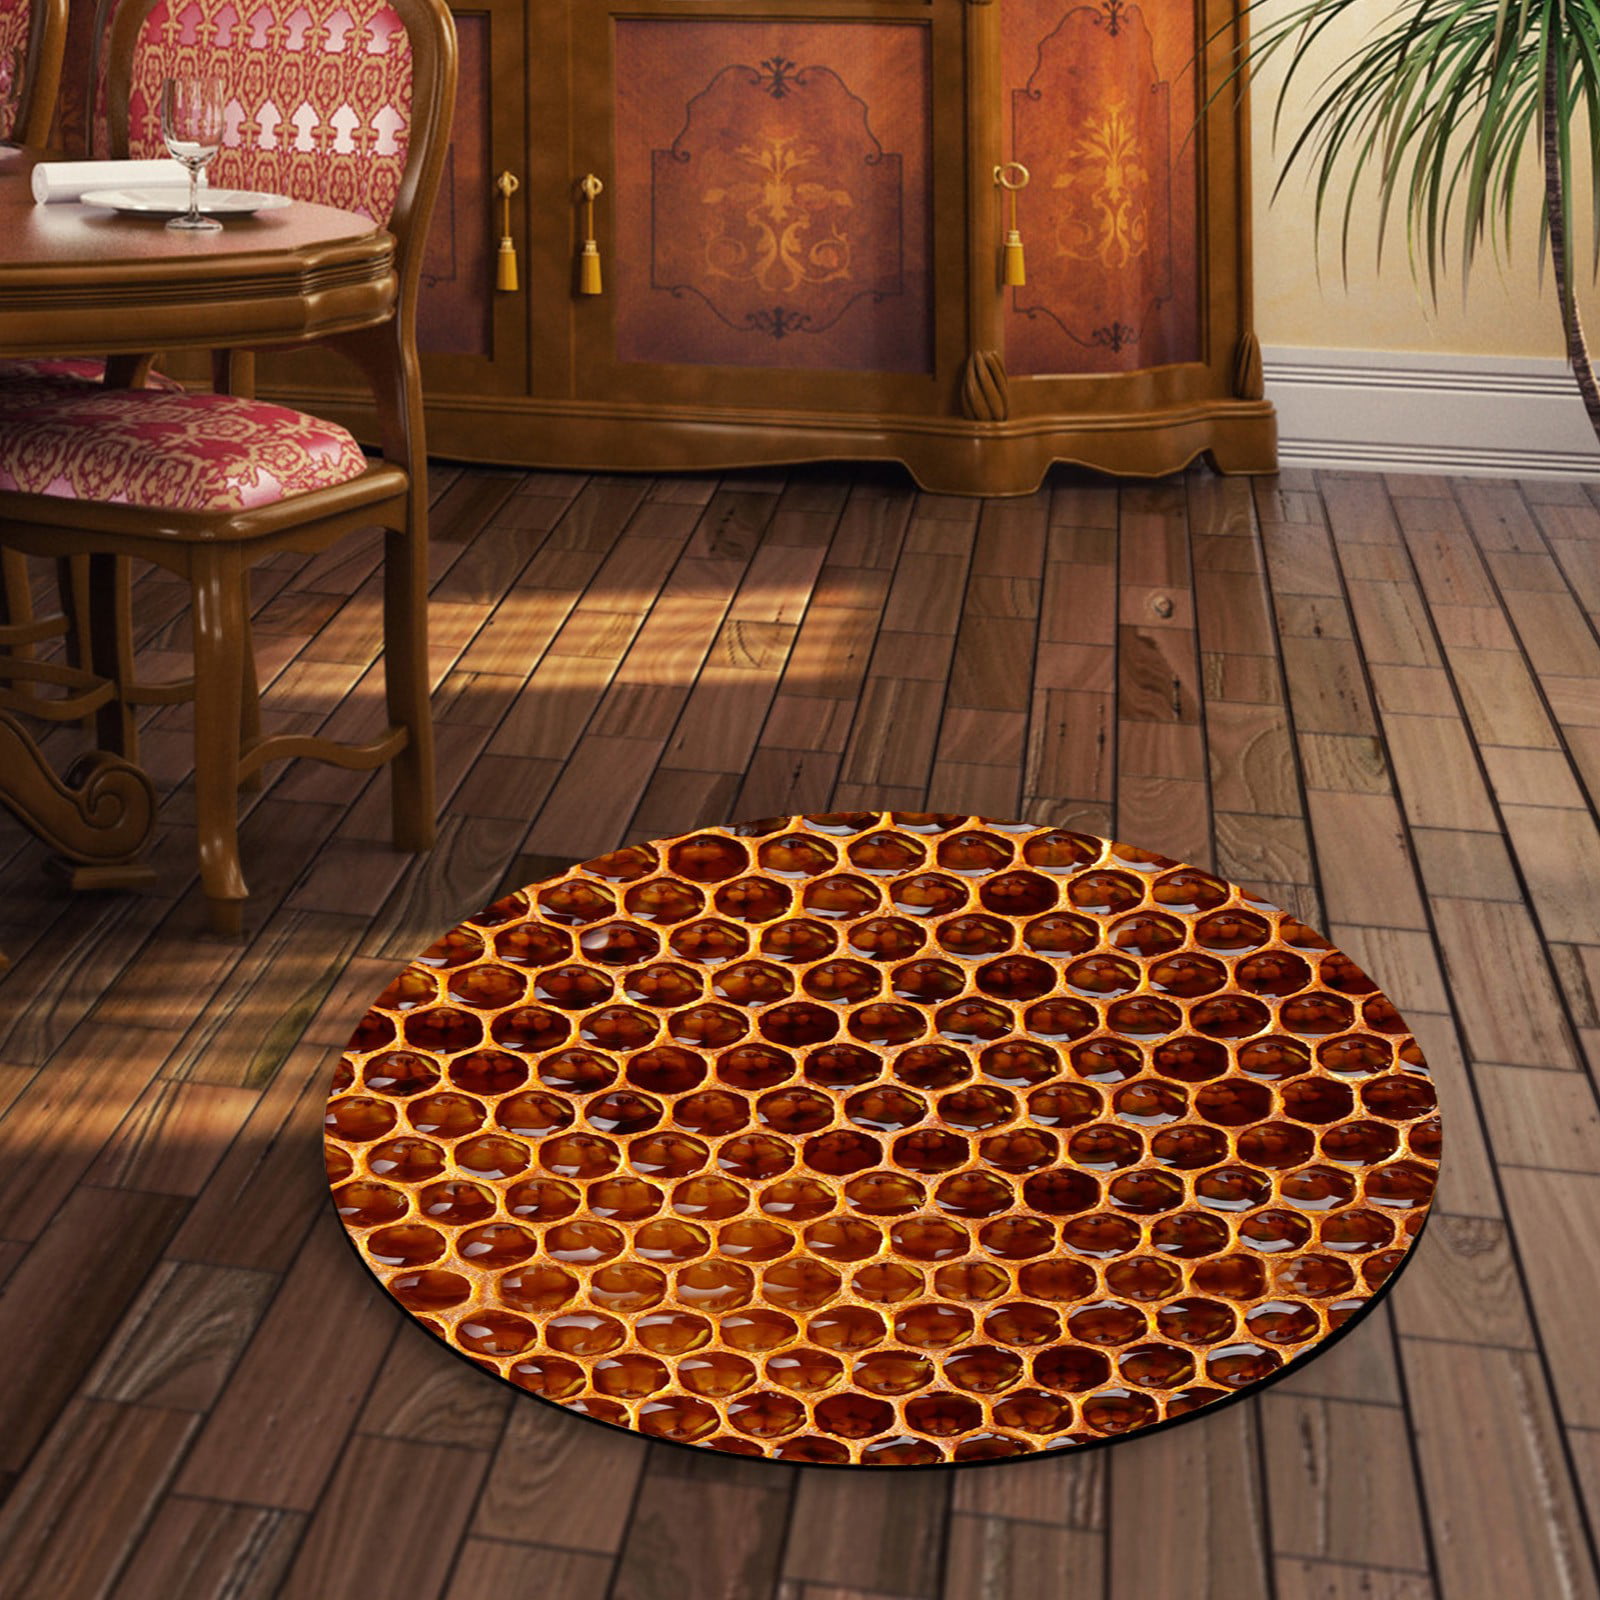 Green Spring Honeycomb Bee Bedroom Floor Mat Yoga Carpet Kids Play Area Rugs 